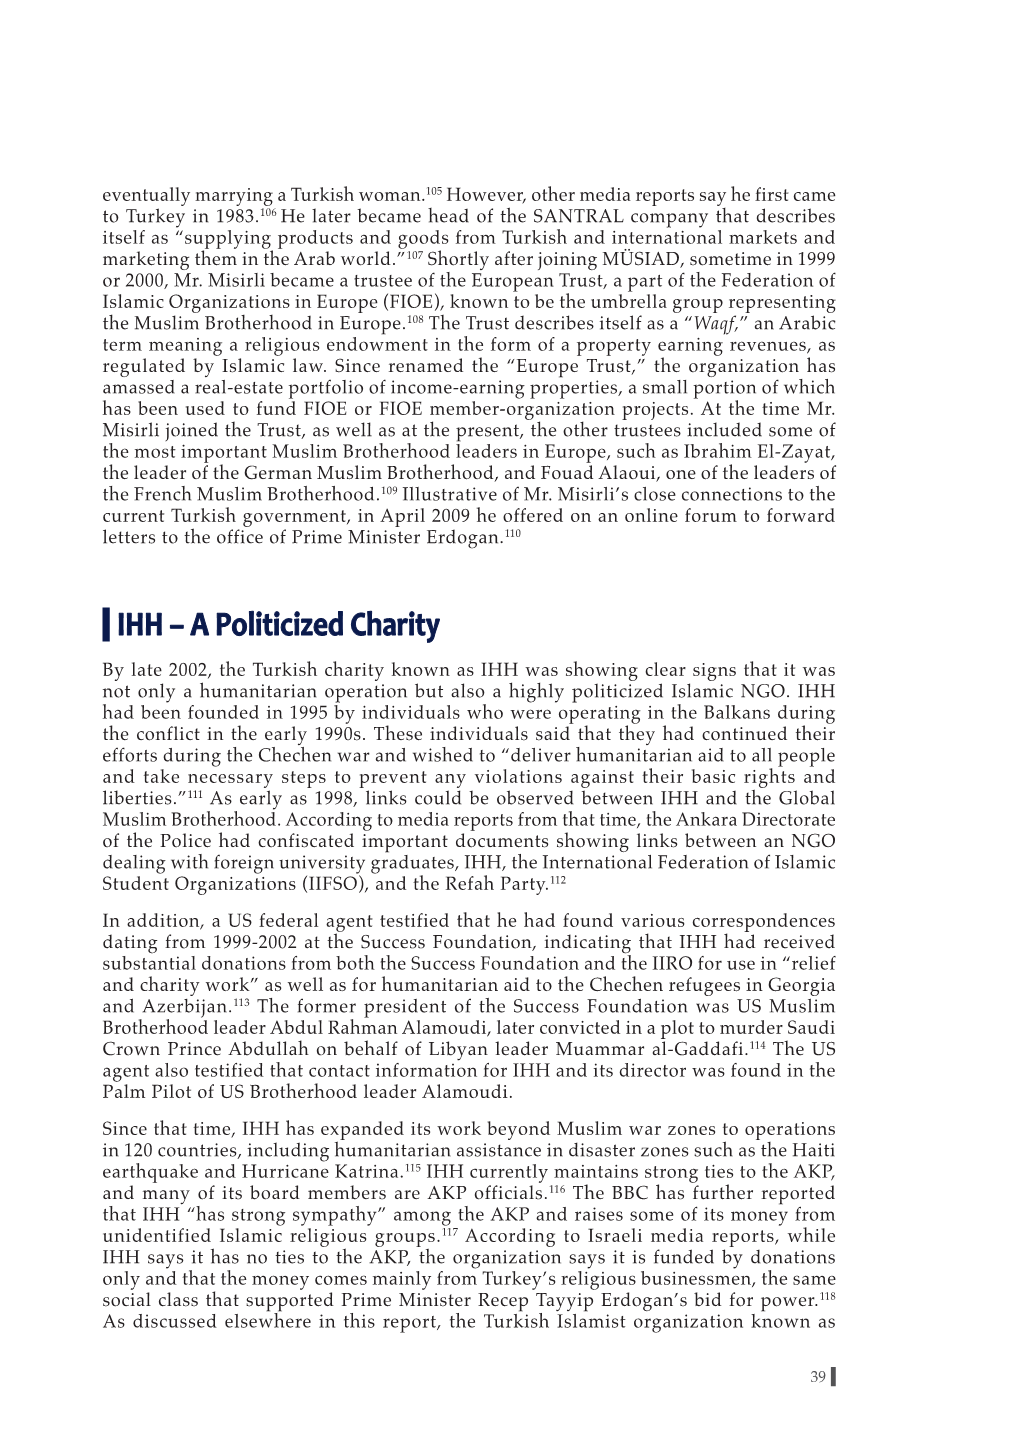 IHH – a Politicized Charity